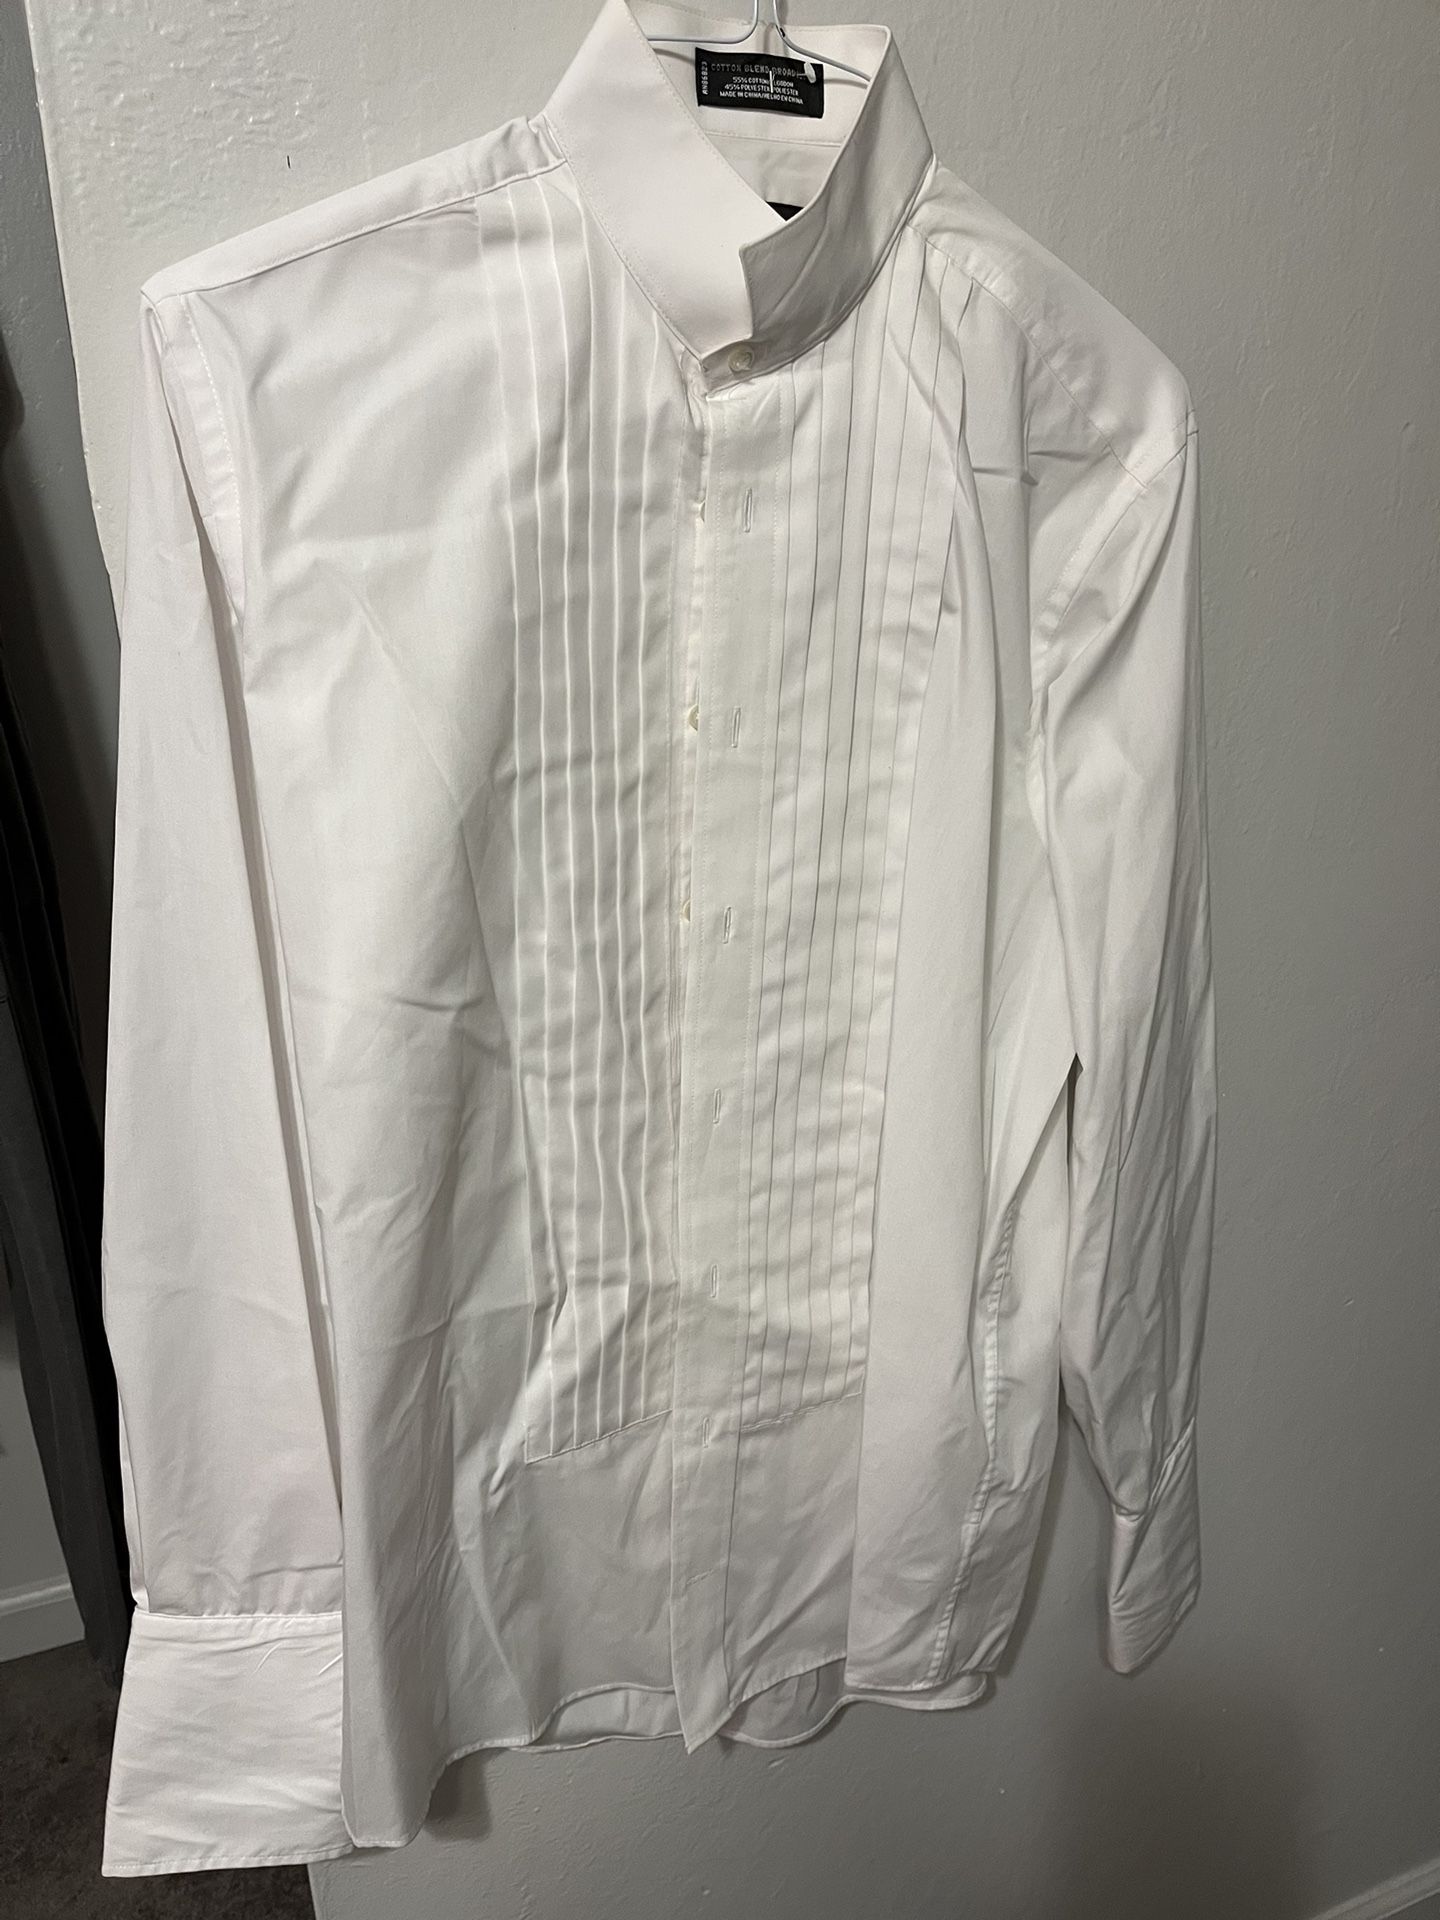 Formal white shirt size 15 1/2